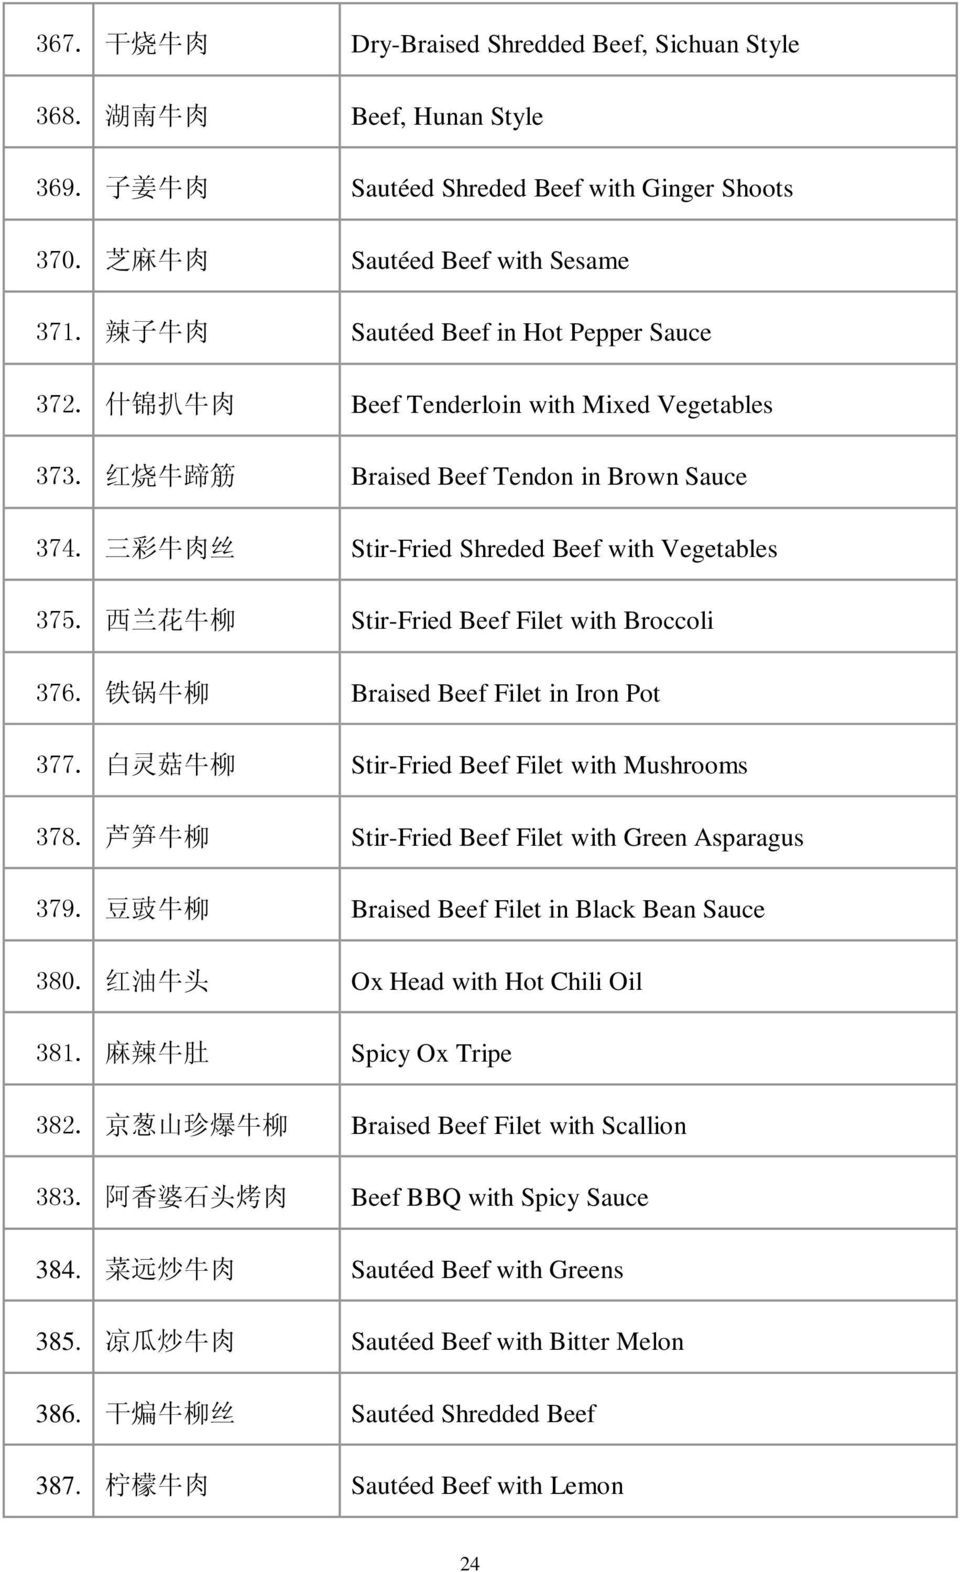 三 彩 牛 肉 丝 Stir-Fried Shreded Beef with Vegetables 375. 西 兰 花 牛 柳 Stir-Fried Beef Filet with Broccoli 376. 铁 锅 牛 柳 Braised Beef Filet in Iron Pot 377.